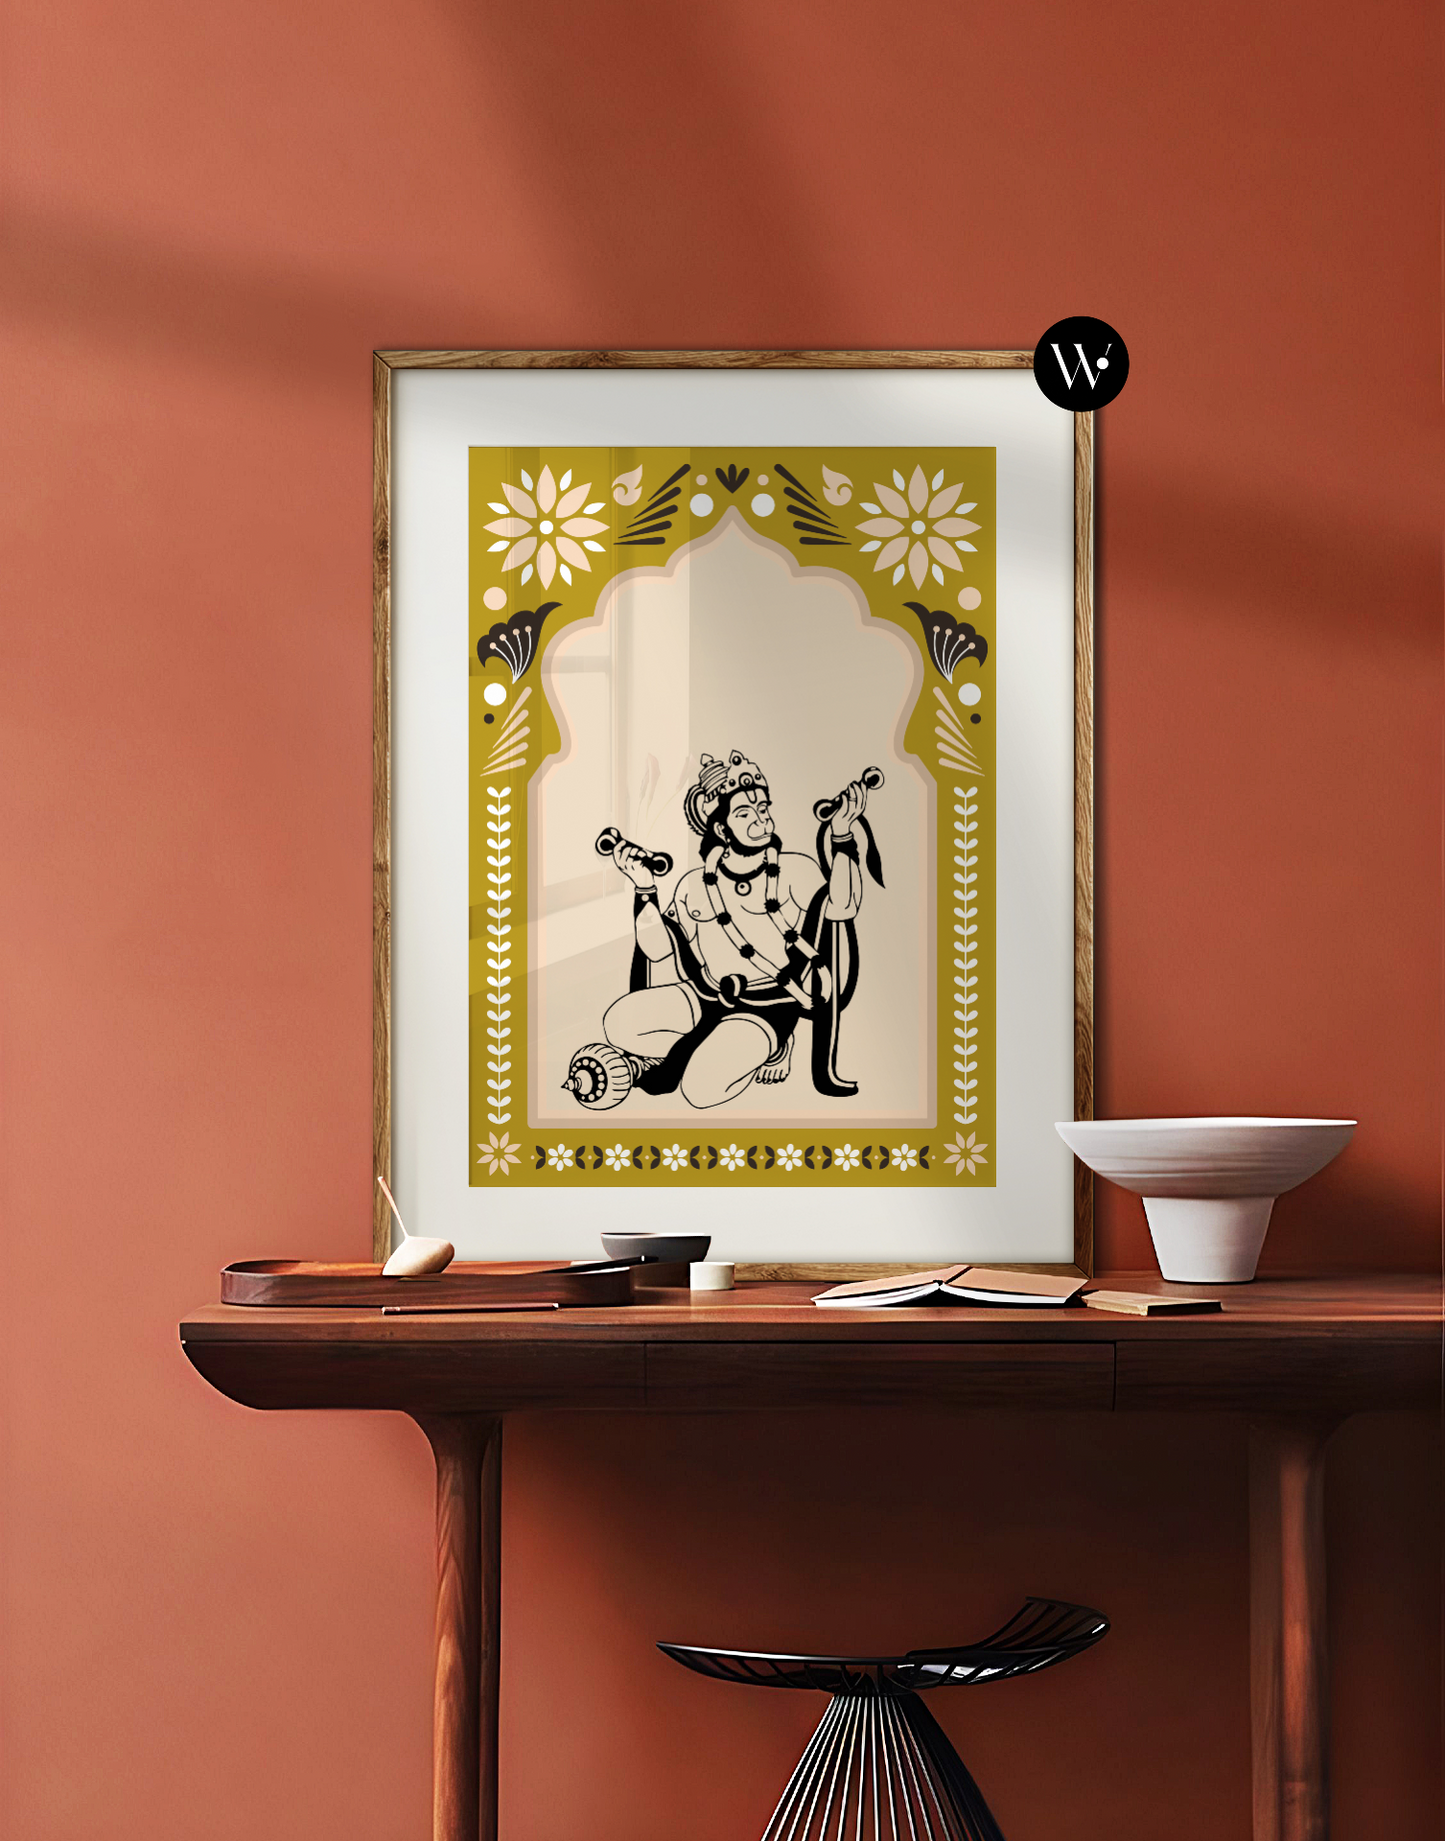 Lord Hanuman Poster Print